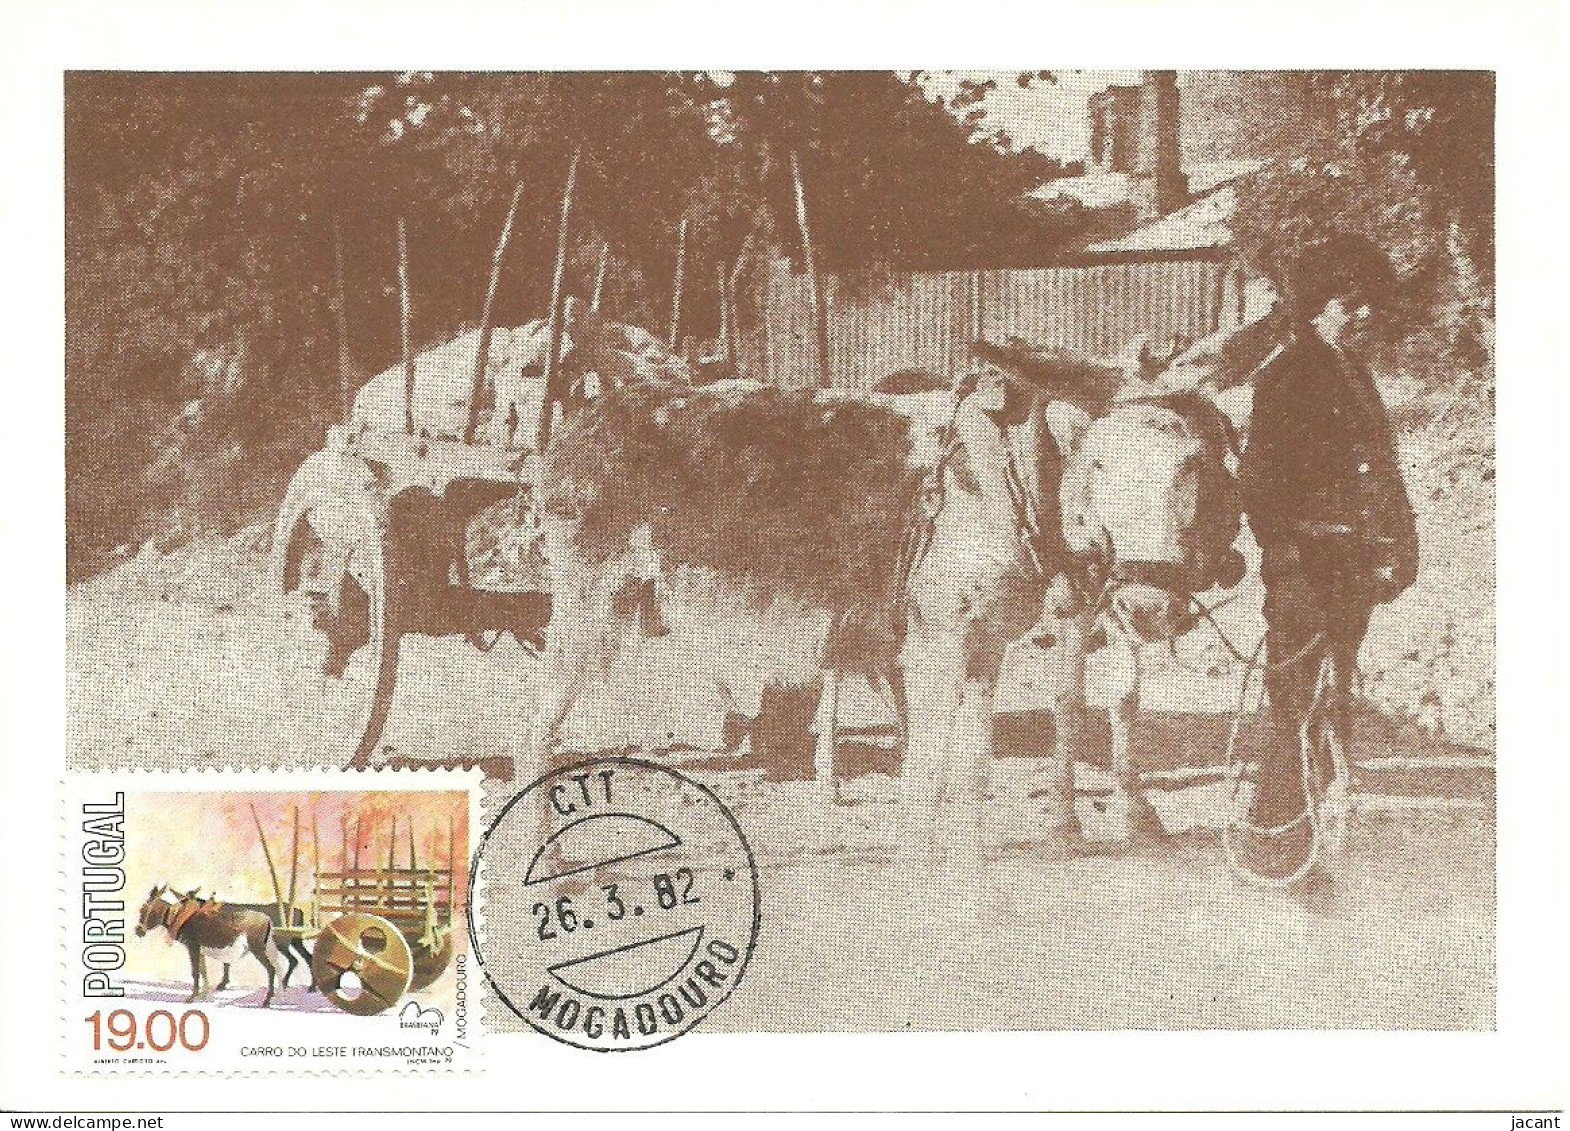 30840 - Carte Maximum - Portugal -  Lubrapex Carro Leste Transmontano Burros - Chars à ânes - Donkey Cart - Maximum Cards & Covers